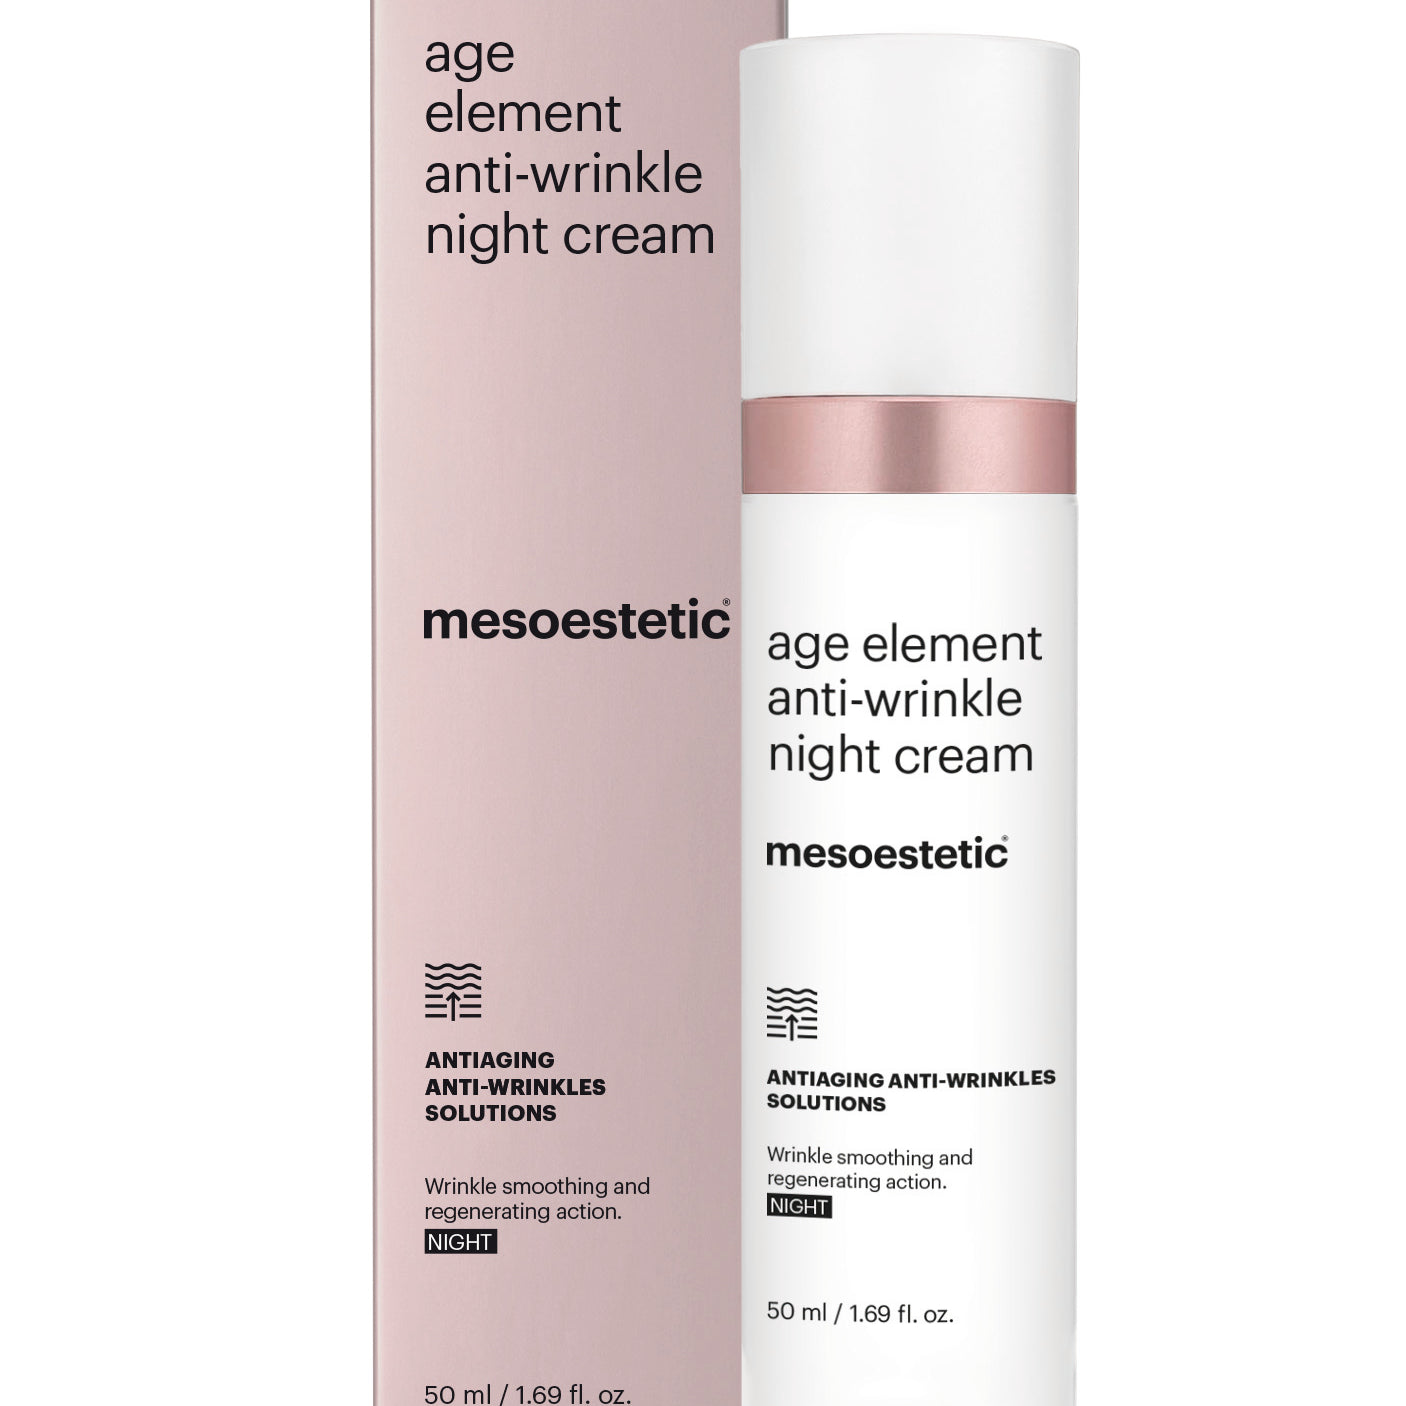 Mesoestetic age element anti-wrinkle night cream